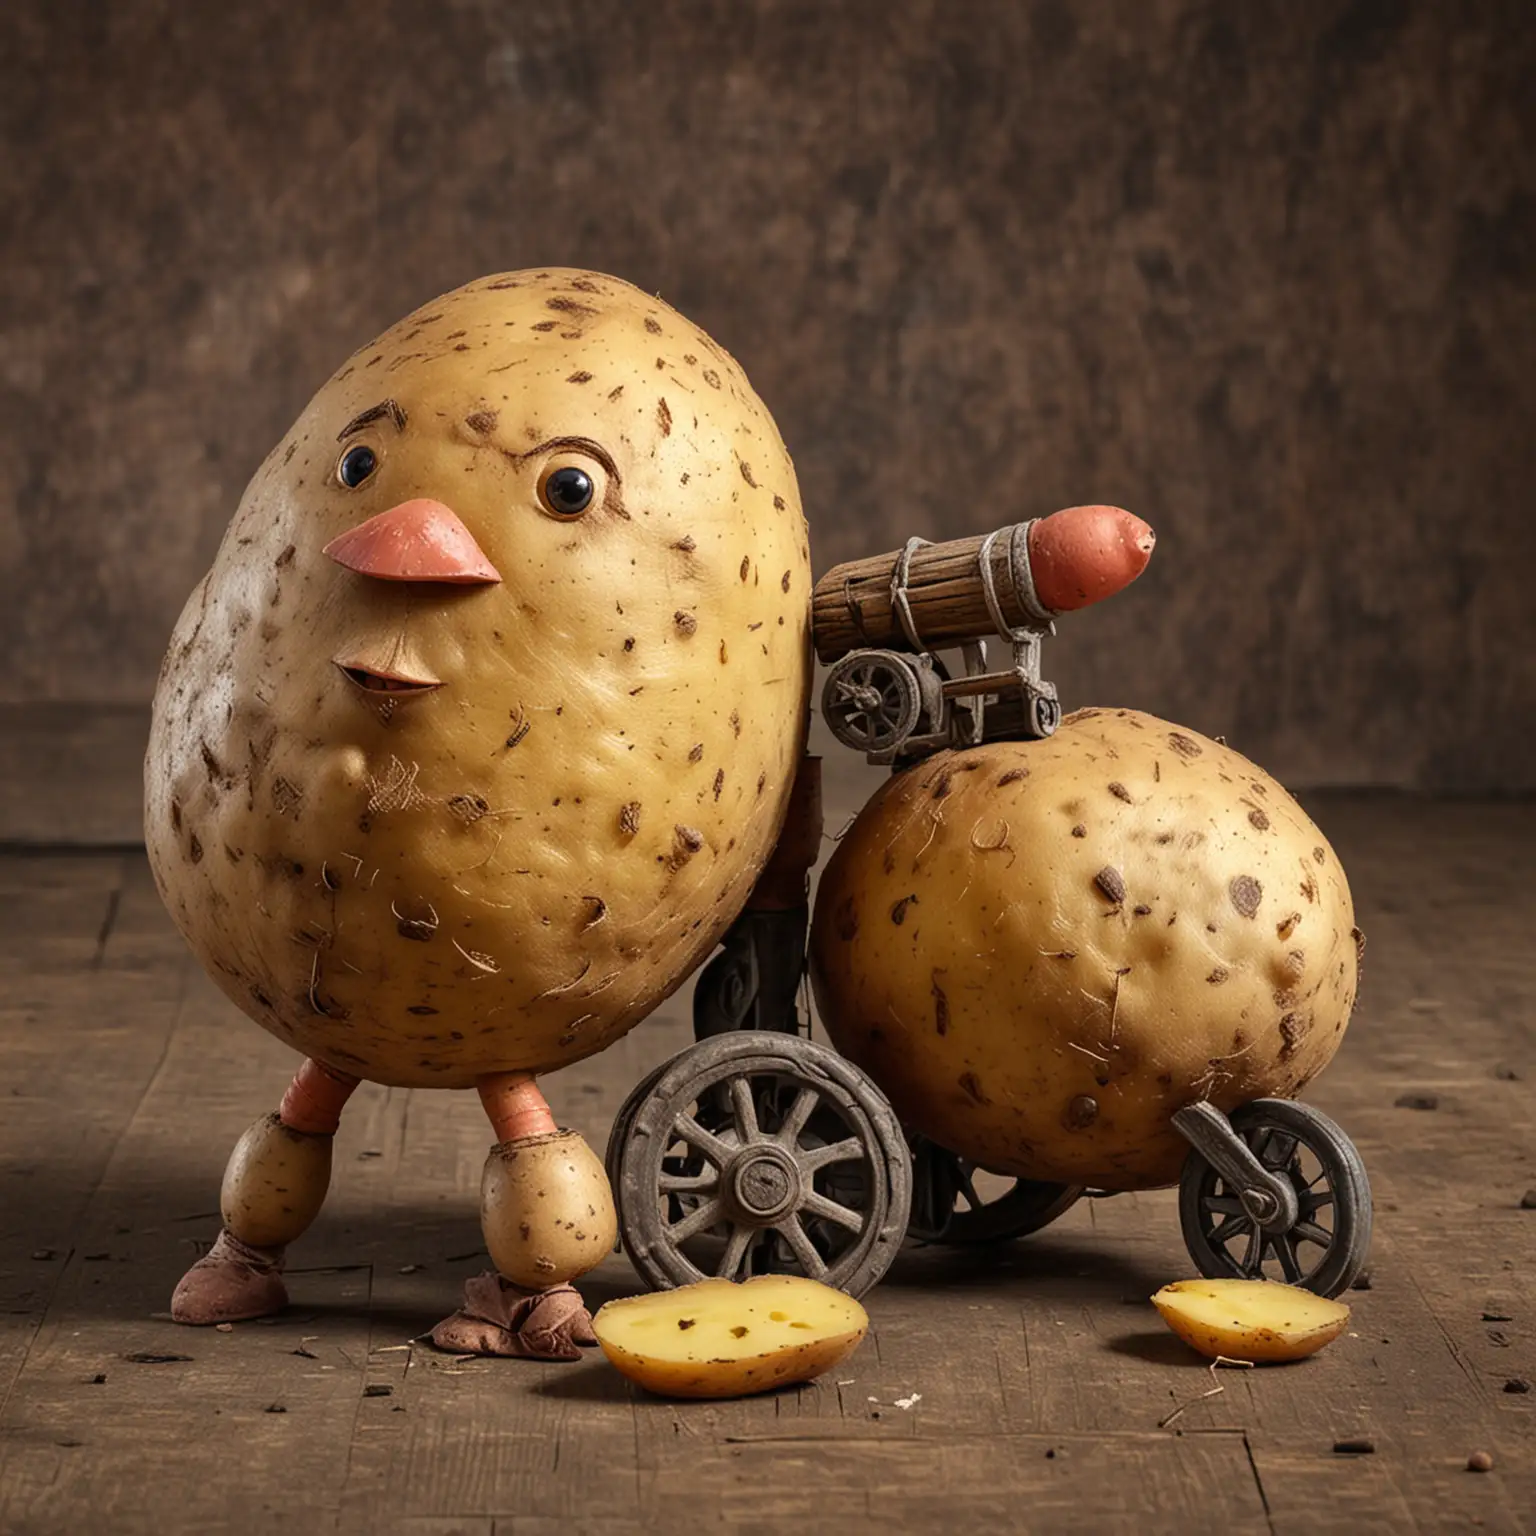 Potato with Leg and Wheel Whimsical Potato Character with Mechanical Enhancements